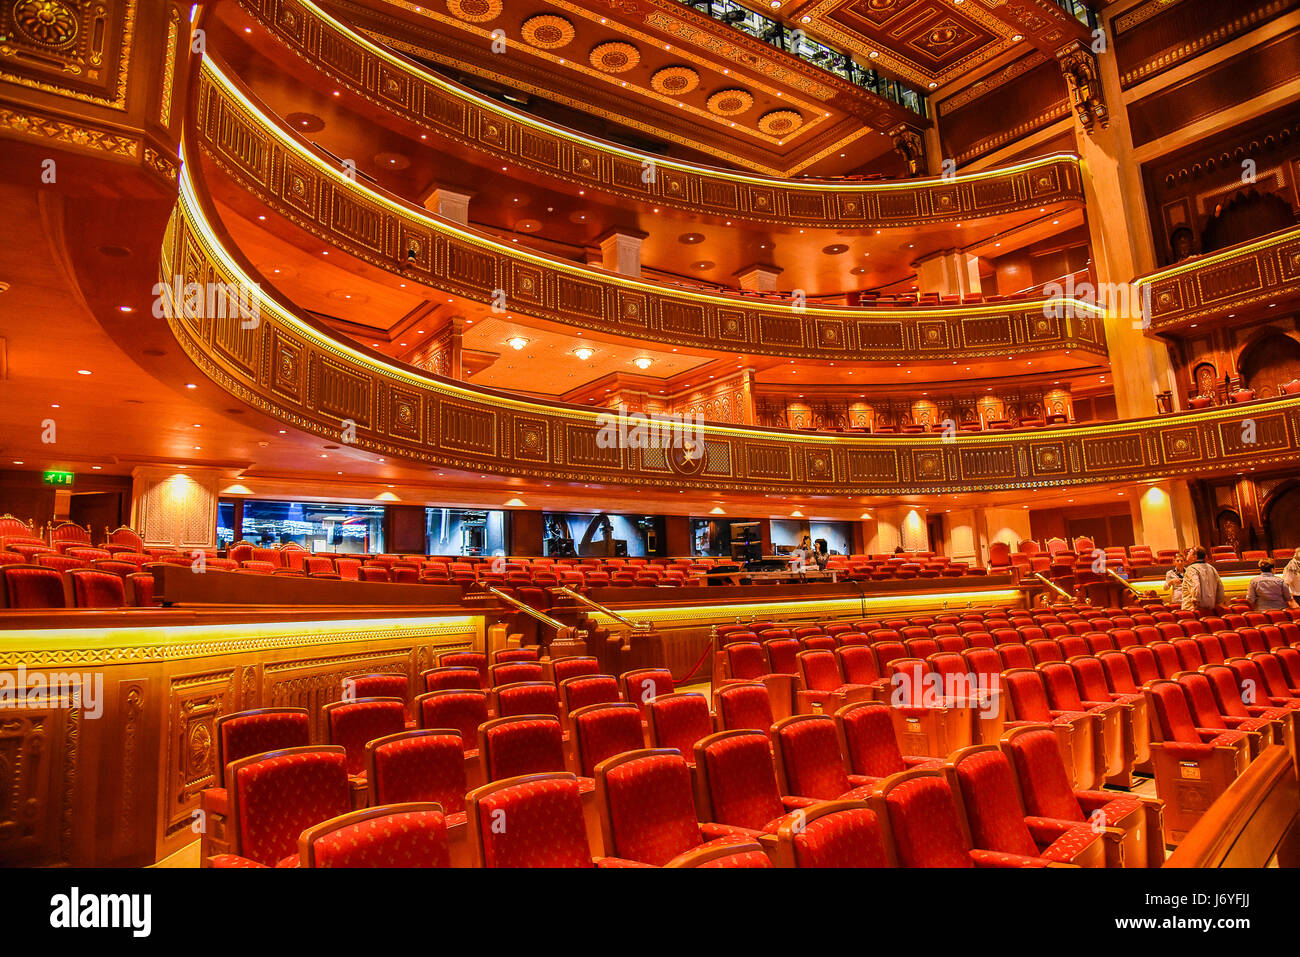 Oman Muscat Auditorium of the Royal Opera House Stock Photo